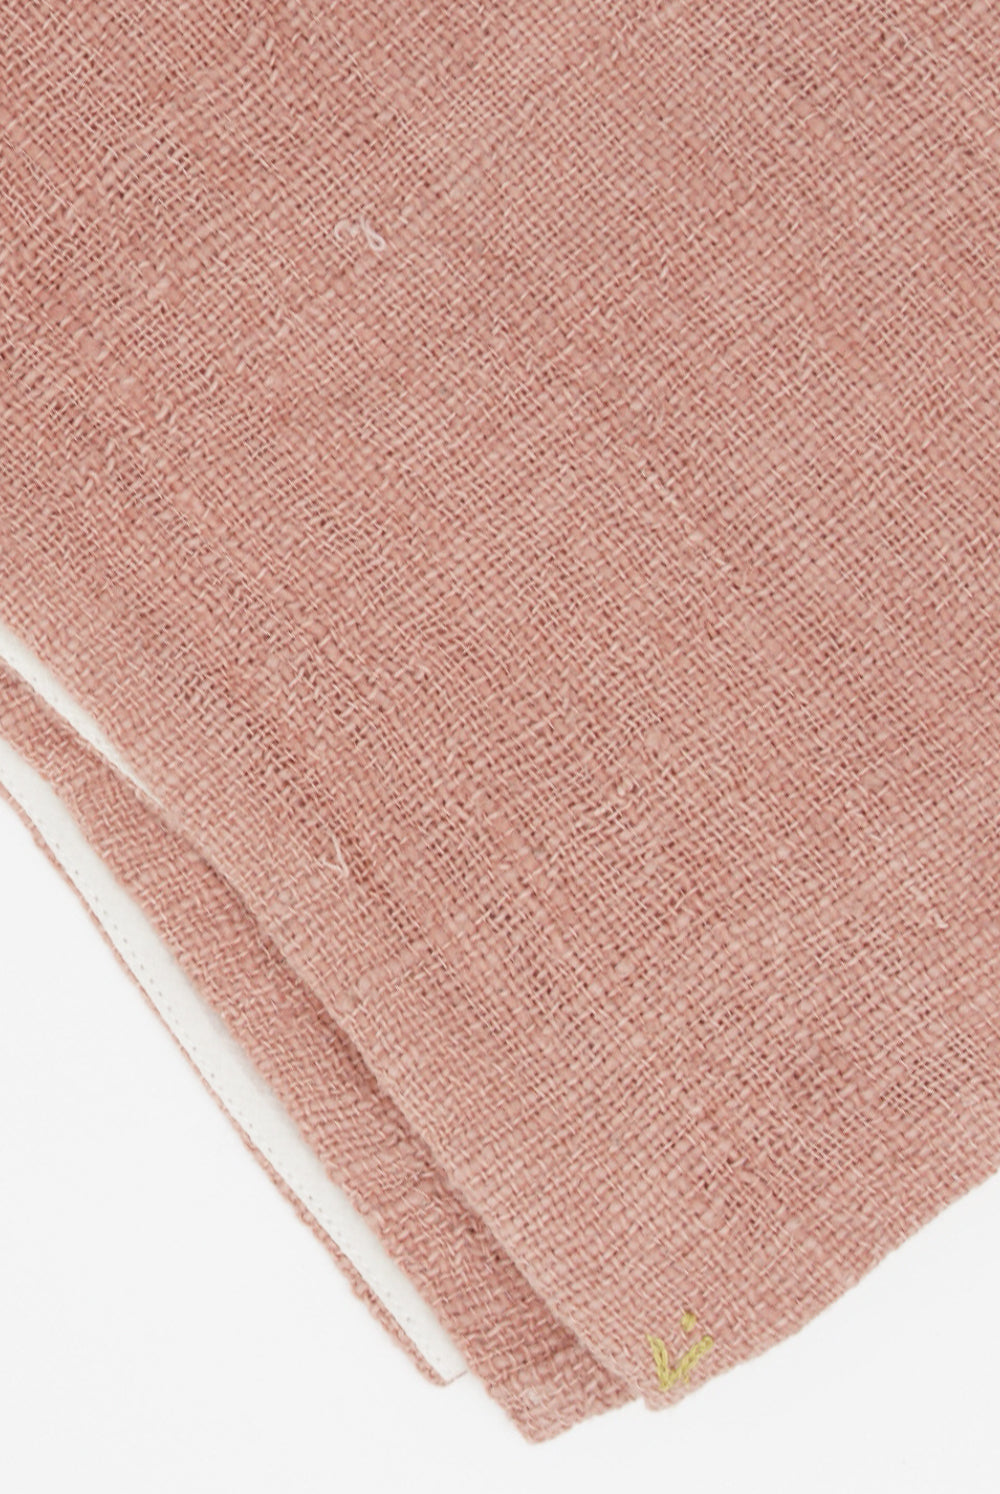 11.11 - Set of 4 Hand Towel / Napkin in Pink detail